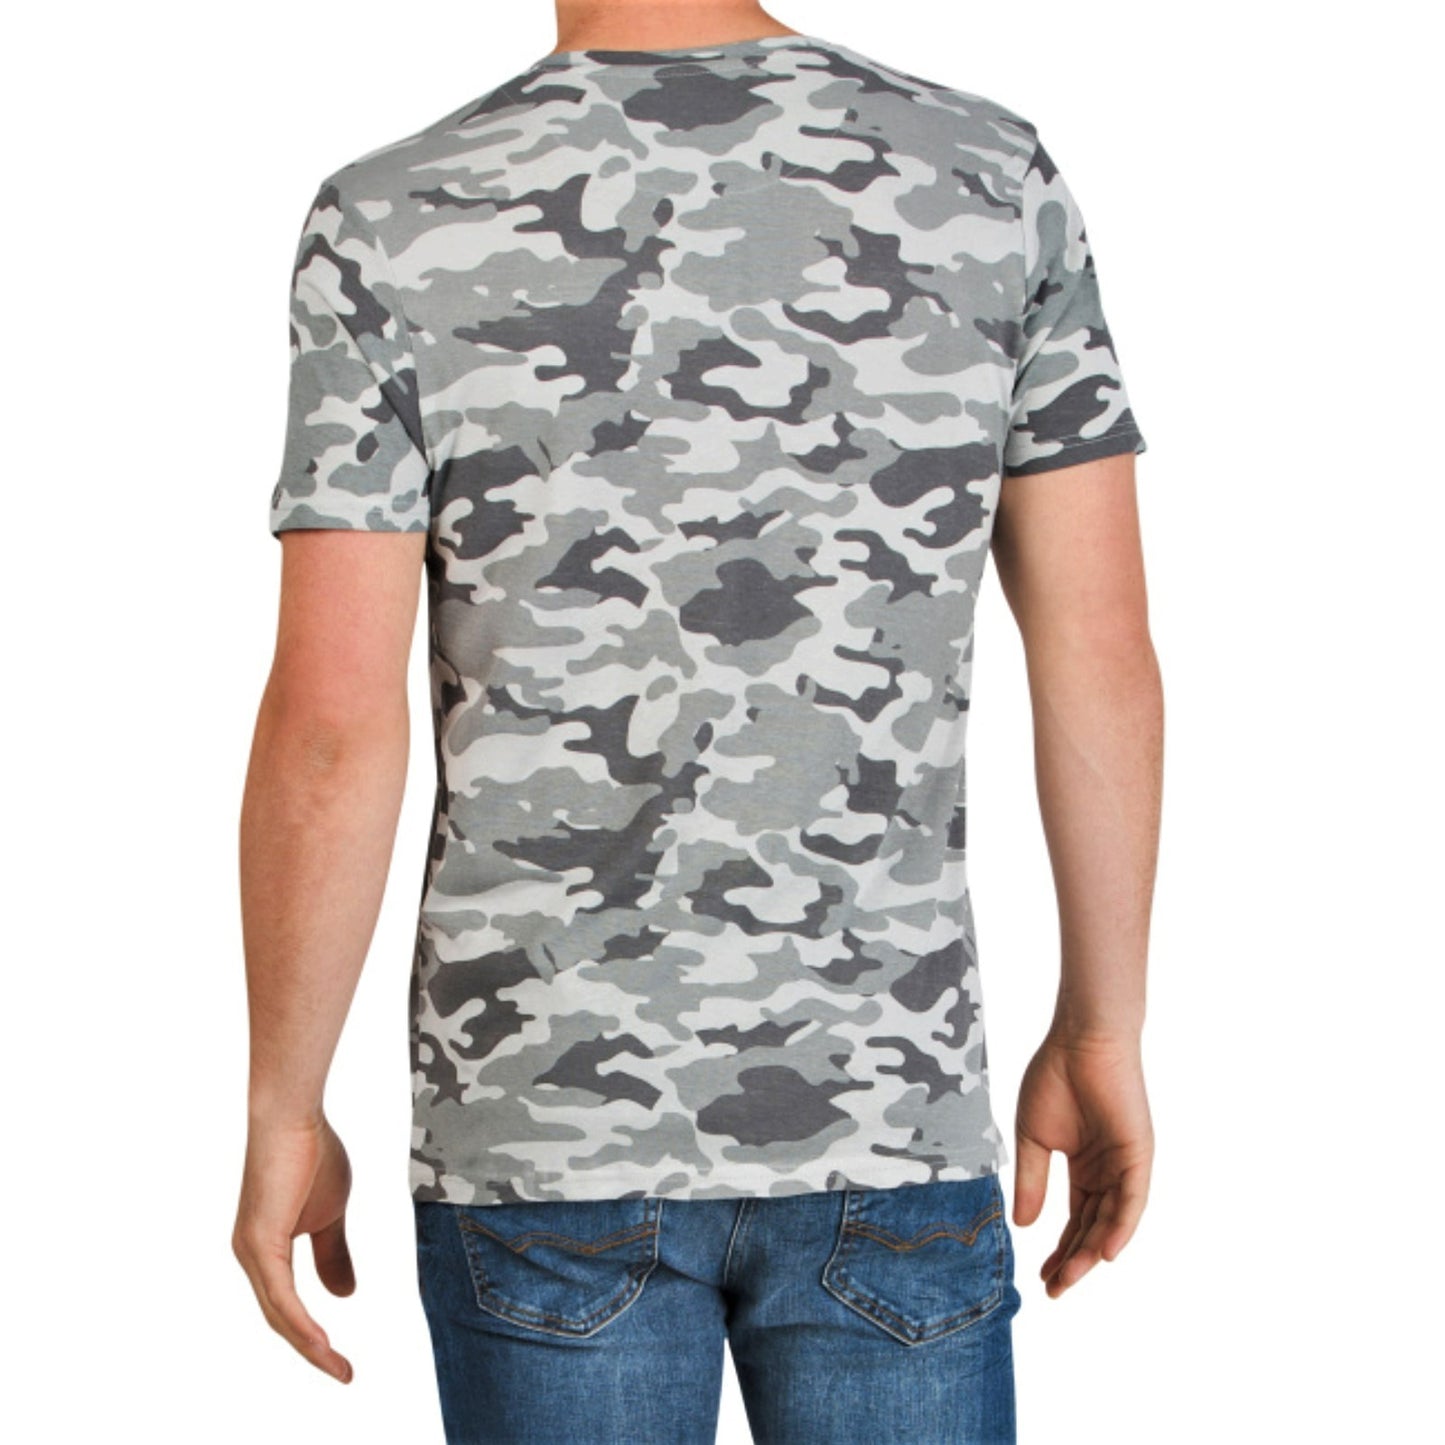 Brave Soul Men's Cotton Disguise Short Sleeve Tee Camo Print T-Shirt